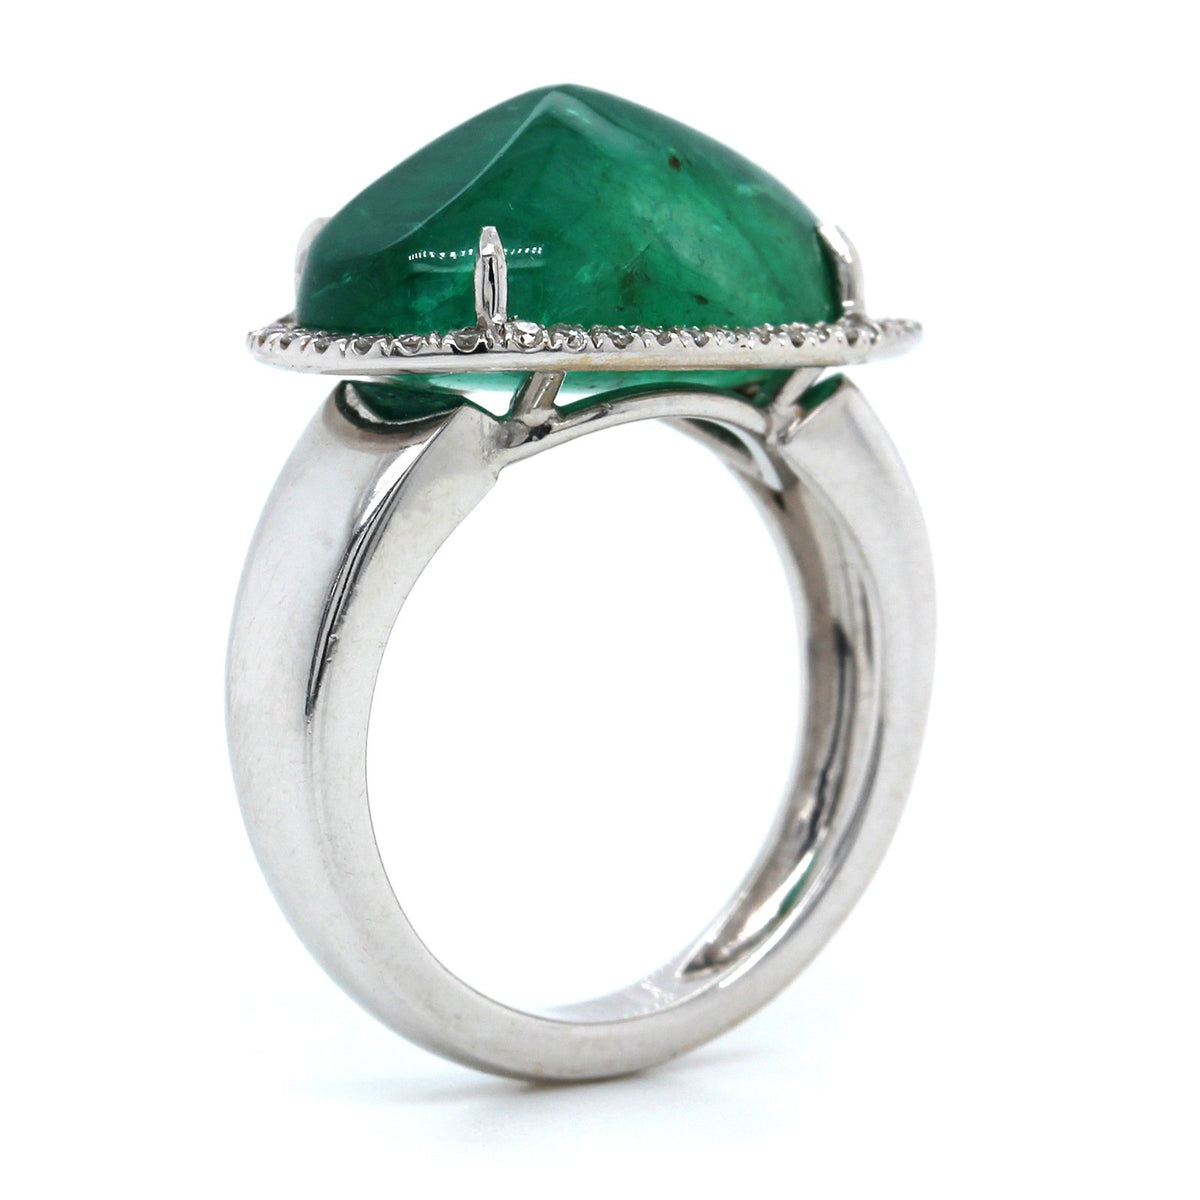 18K White Gold Cabochon Pear Shape Emerald Diamond Ring